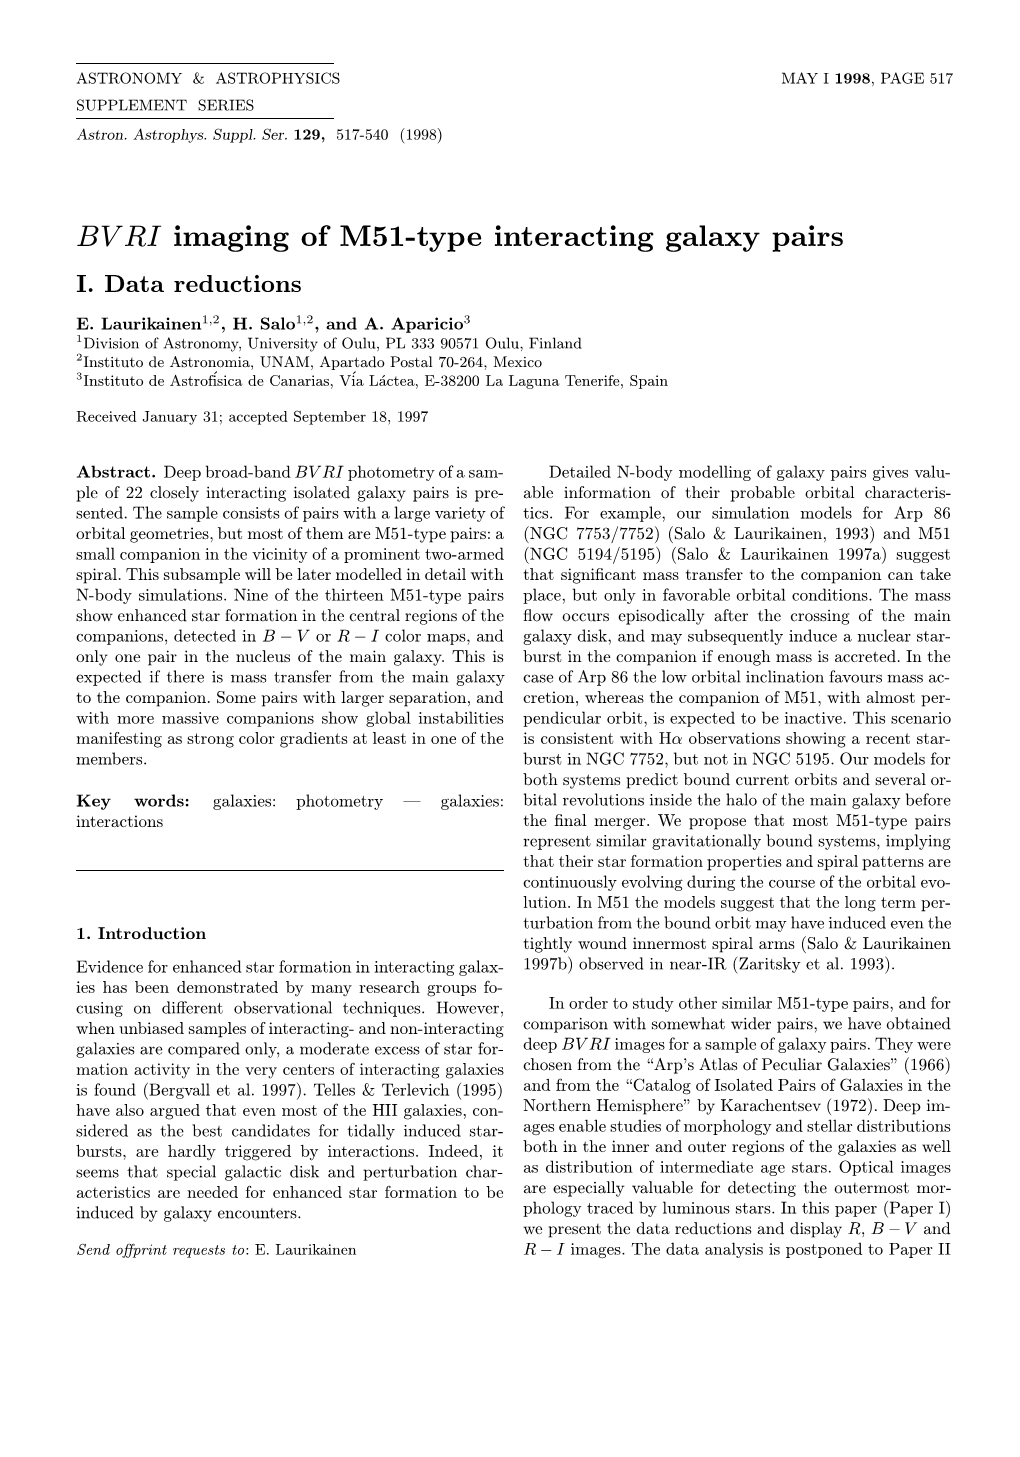 BV RI Imaging of M51-Type Interacting Galaxy Pairs I